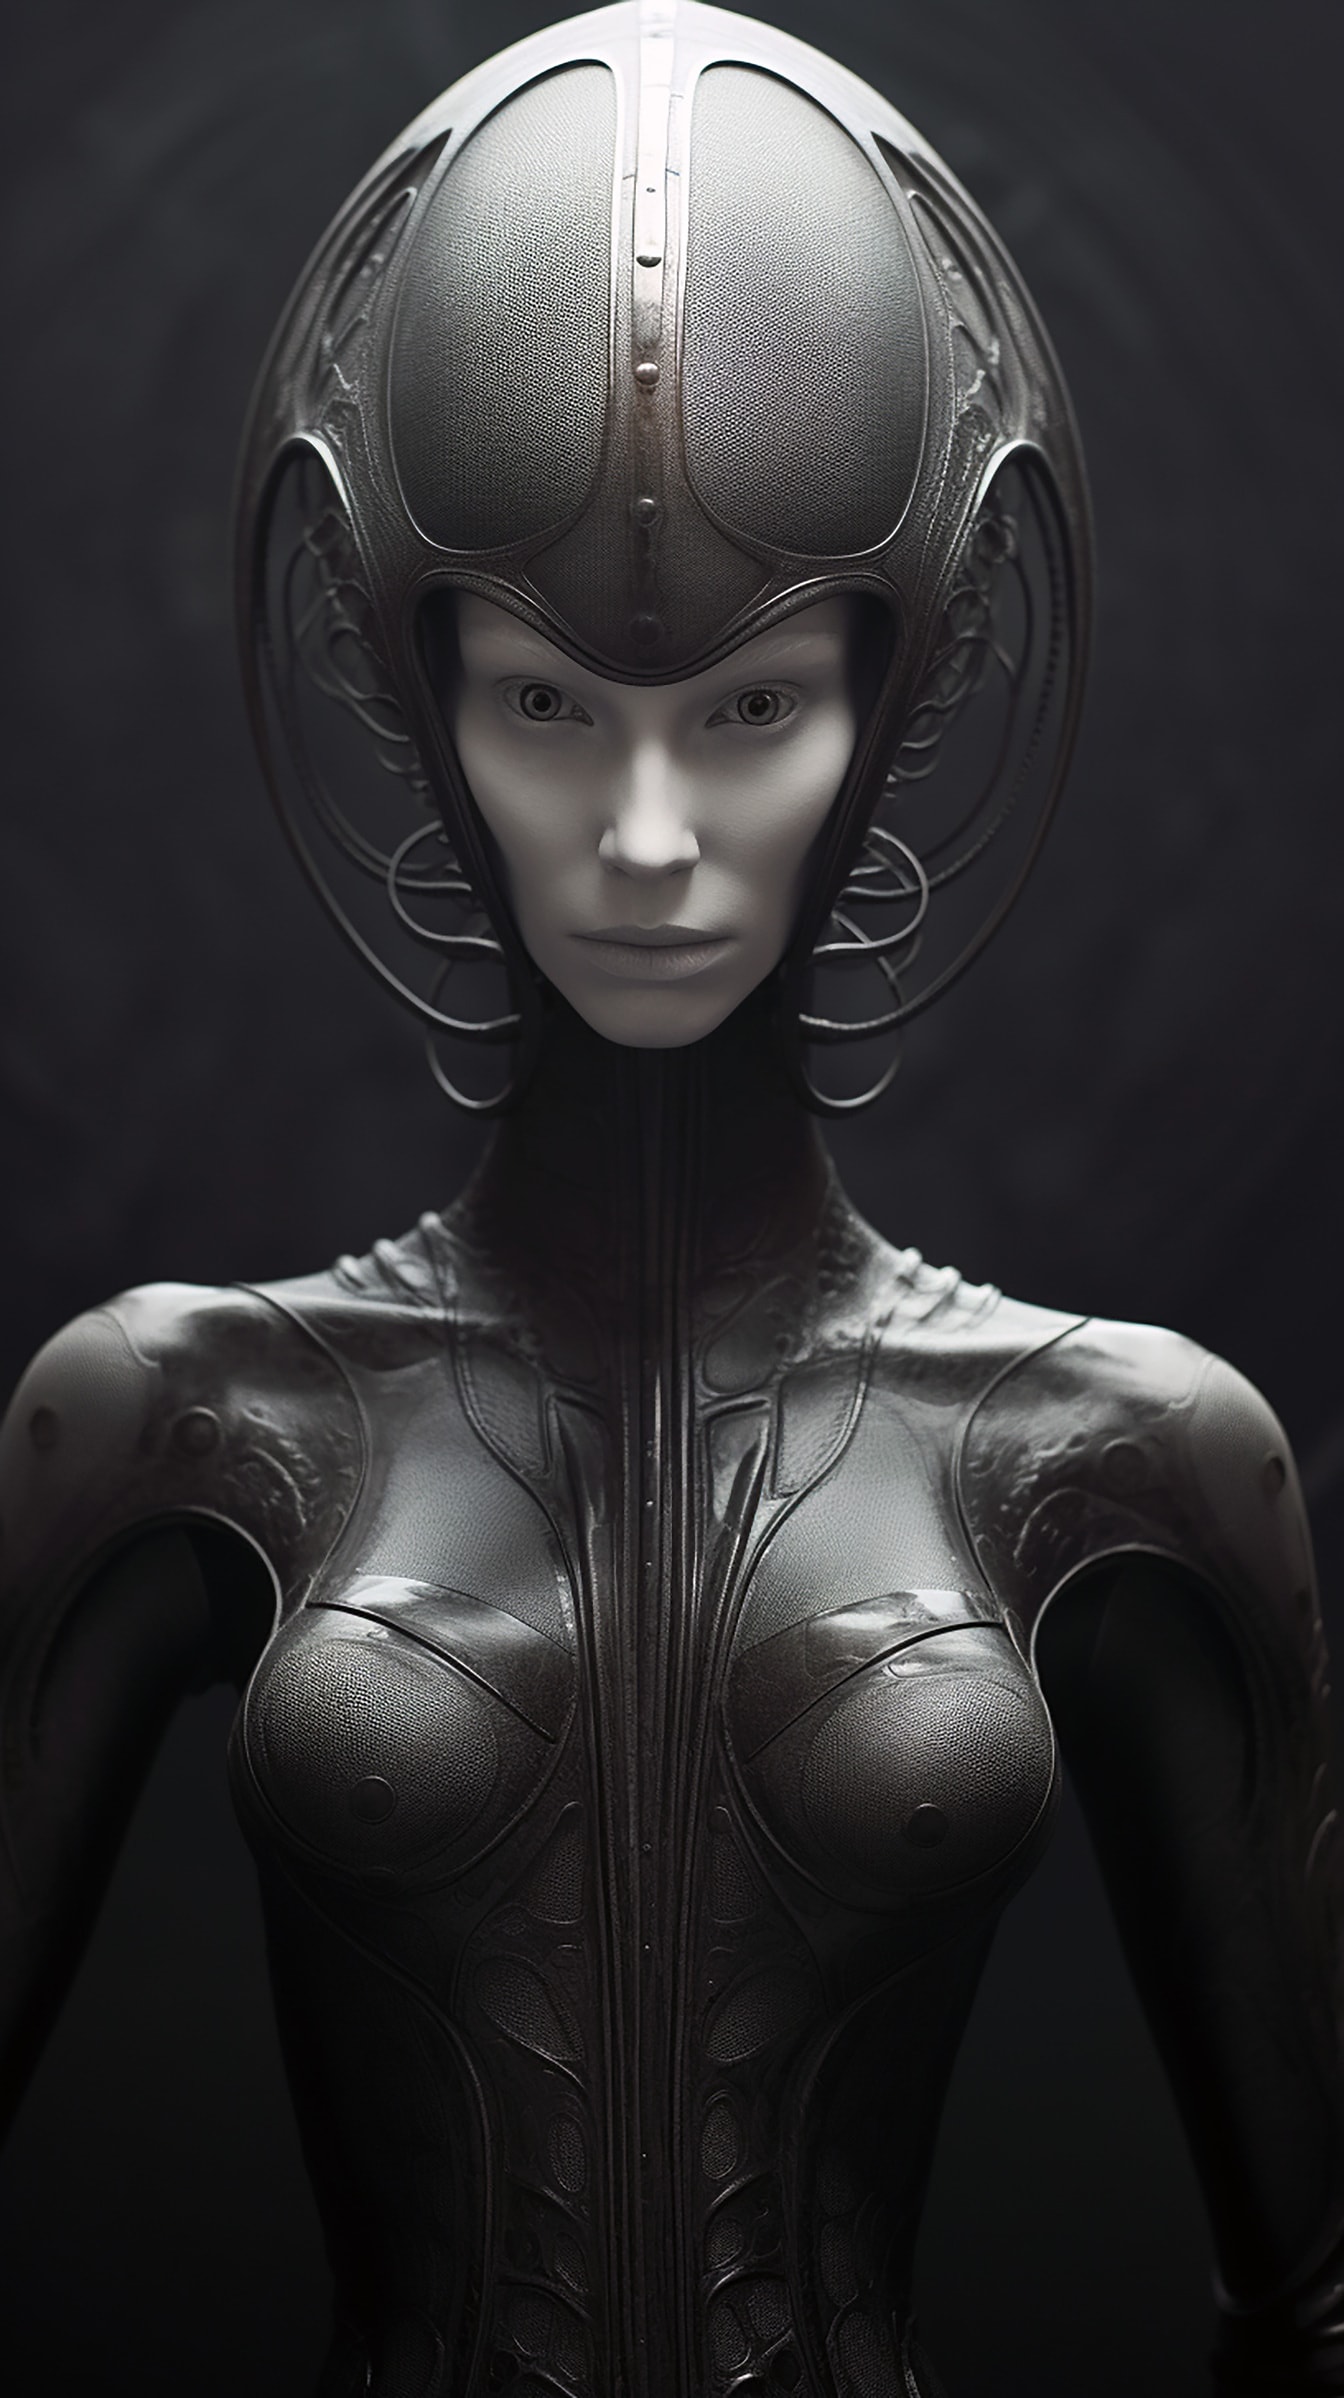 Potret putri alien dongeng dengan helm abu-abu